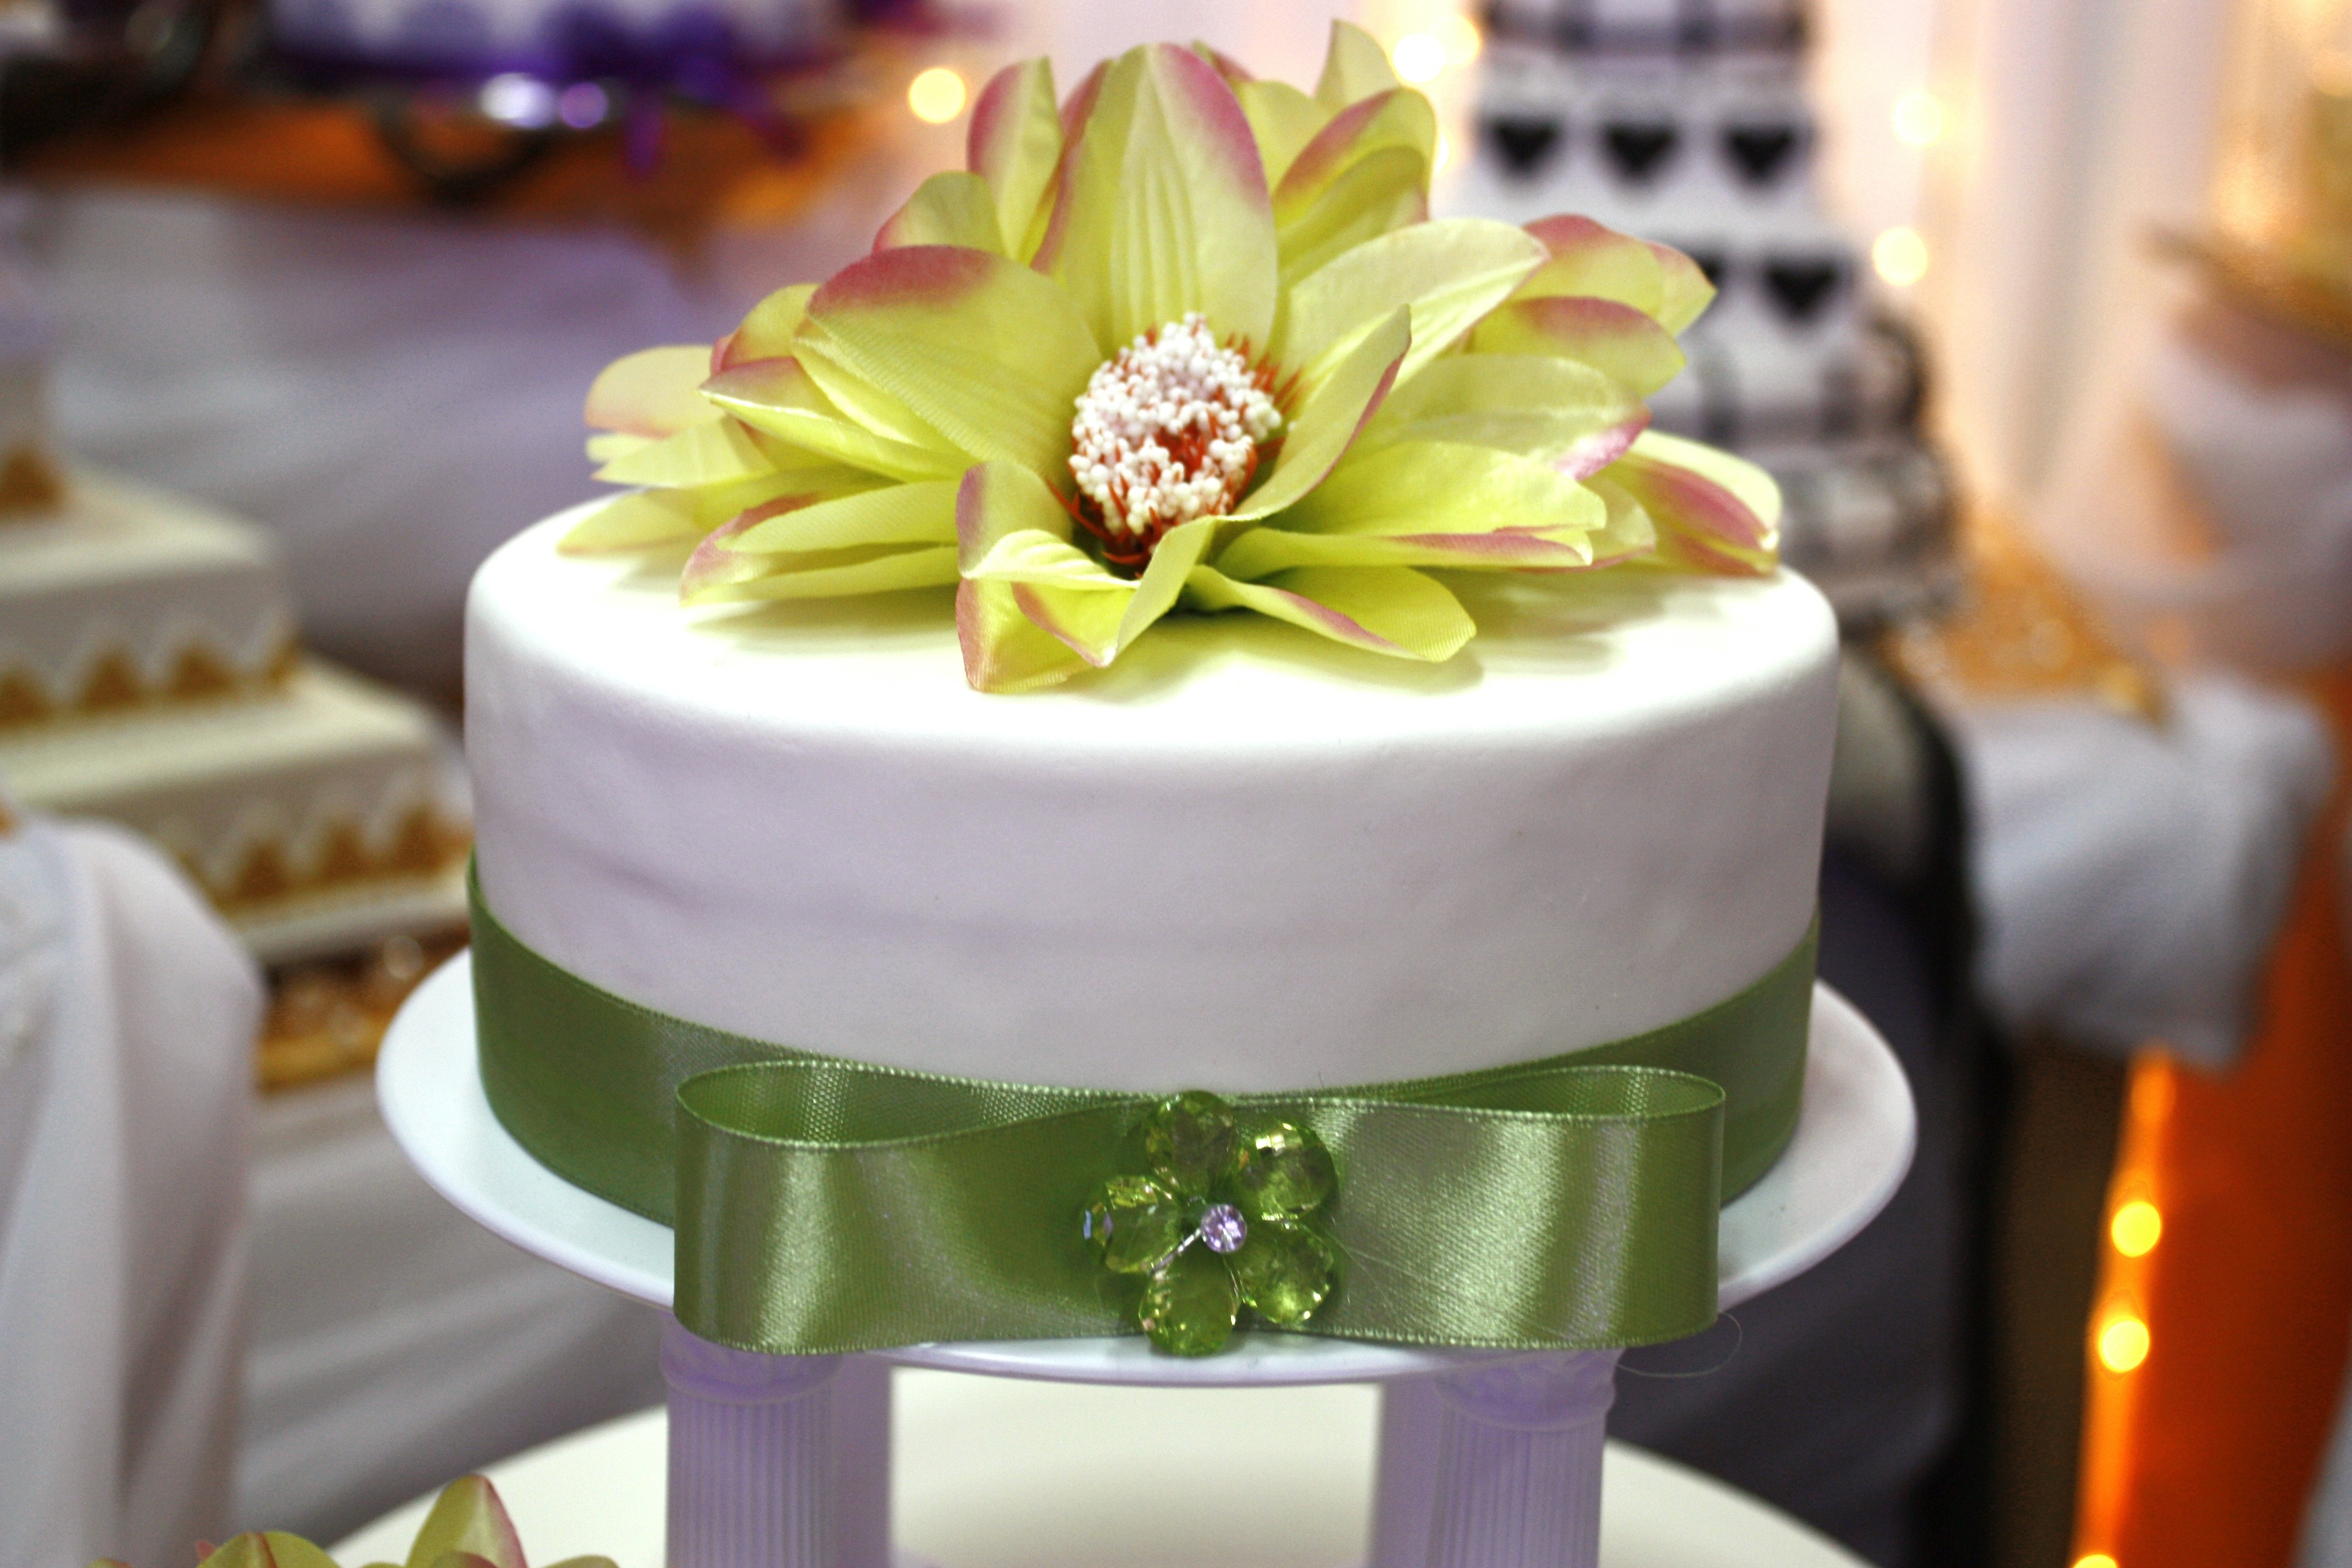 floral cake in closeup photo